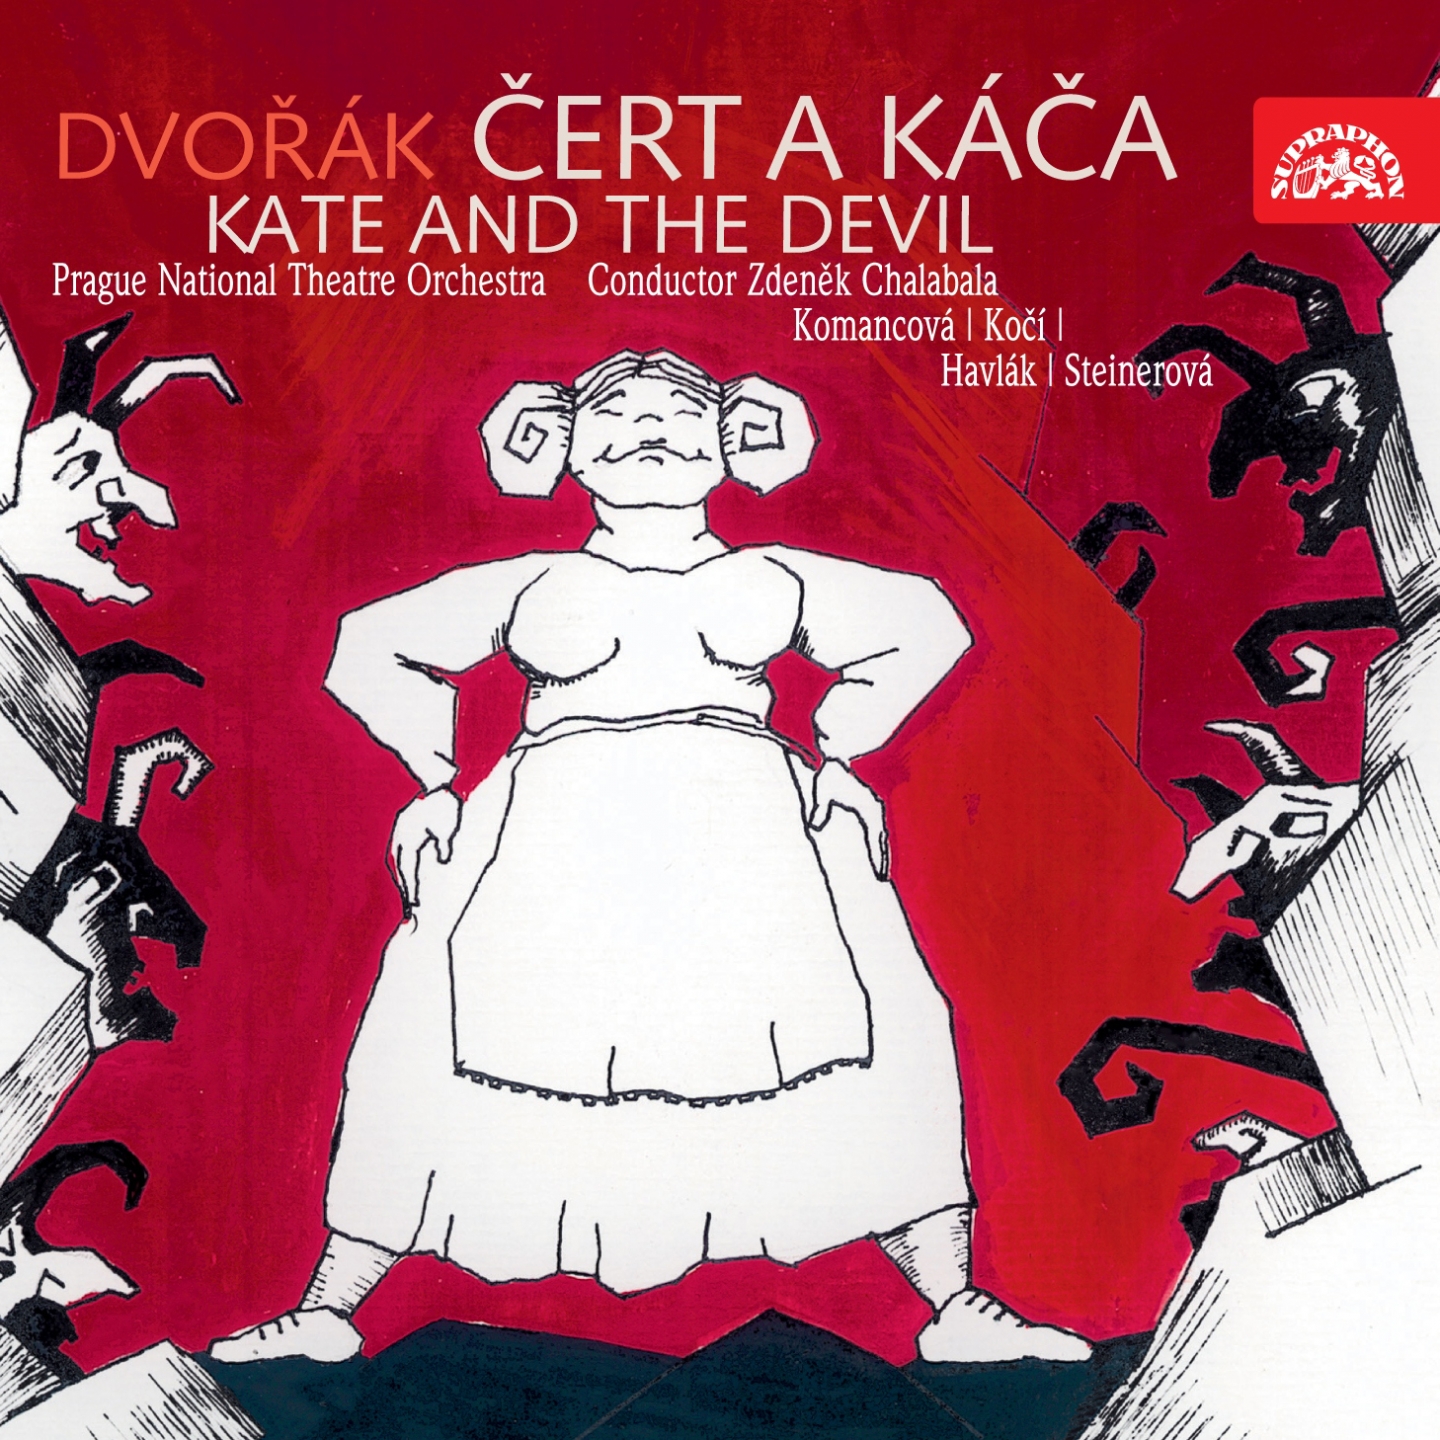 Kate and the Devil, ., Act II: " How Do You like It Here in Hell?" Jirka, Ka a, ert Marbuel